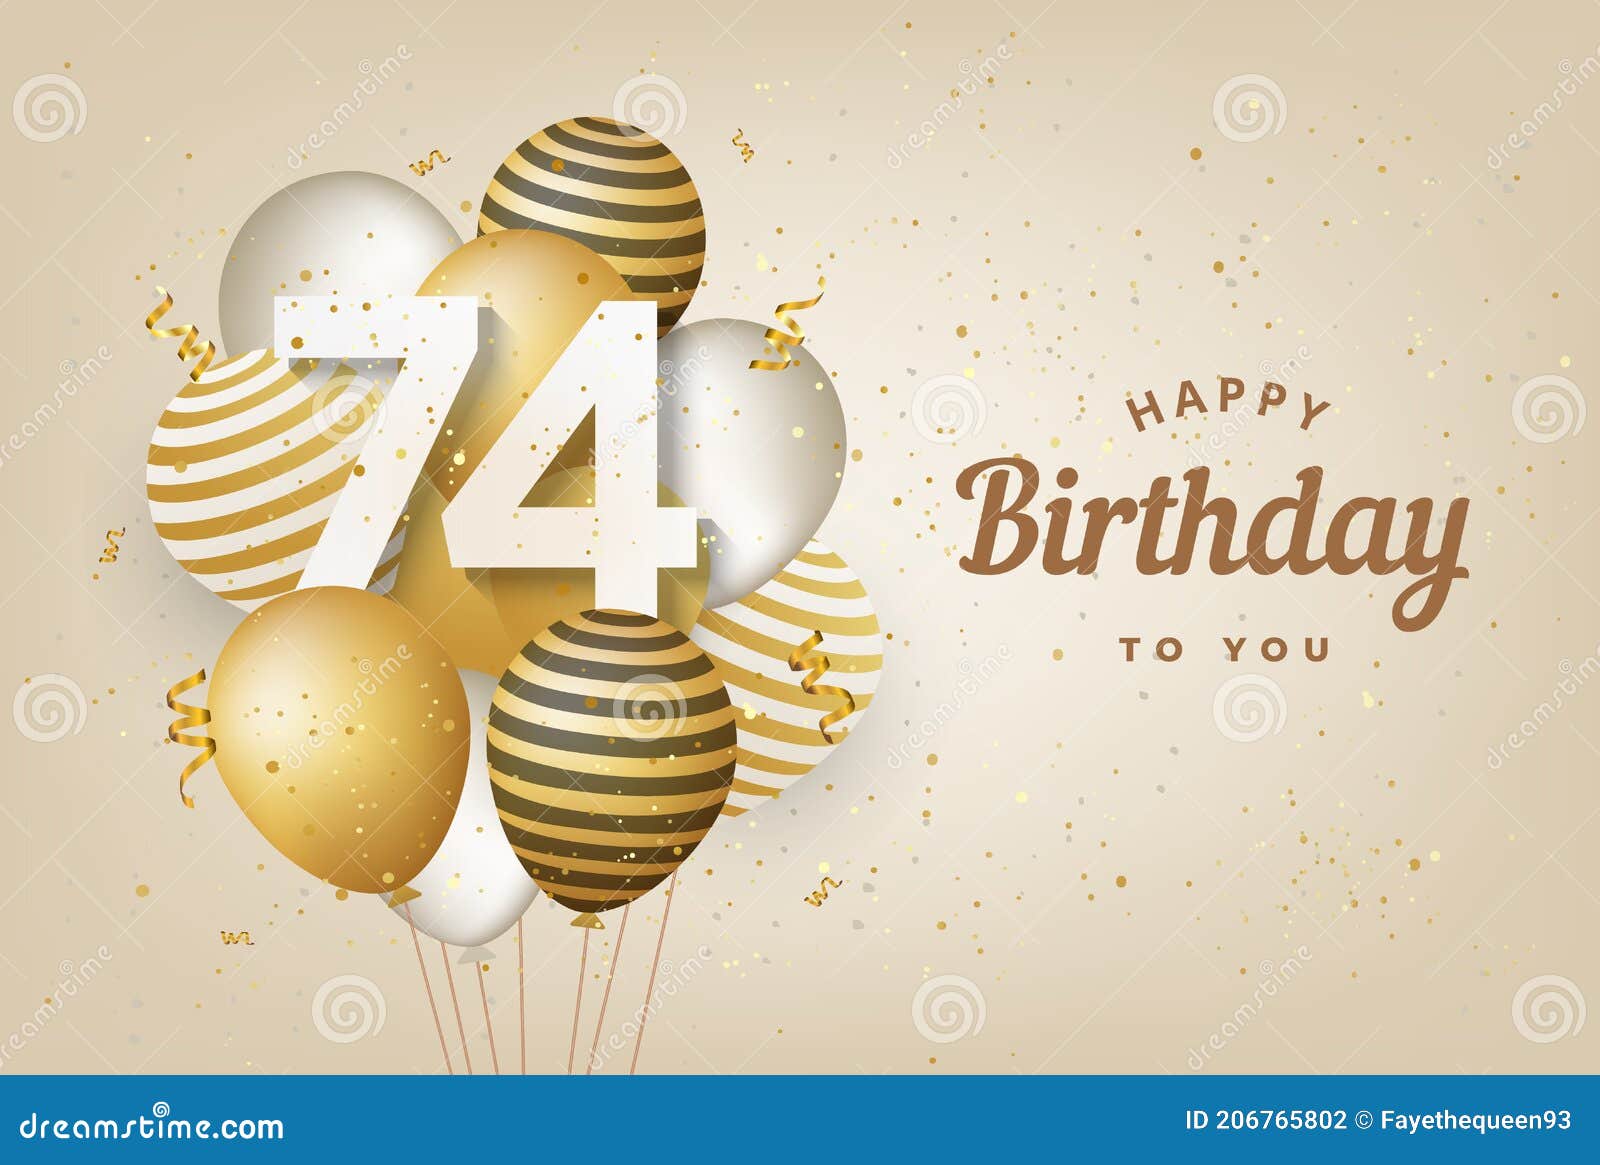 Happy 74th Birthday Balloons Greeting Card Background. Cartoon Vector ...